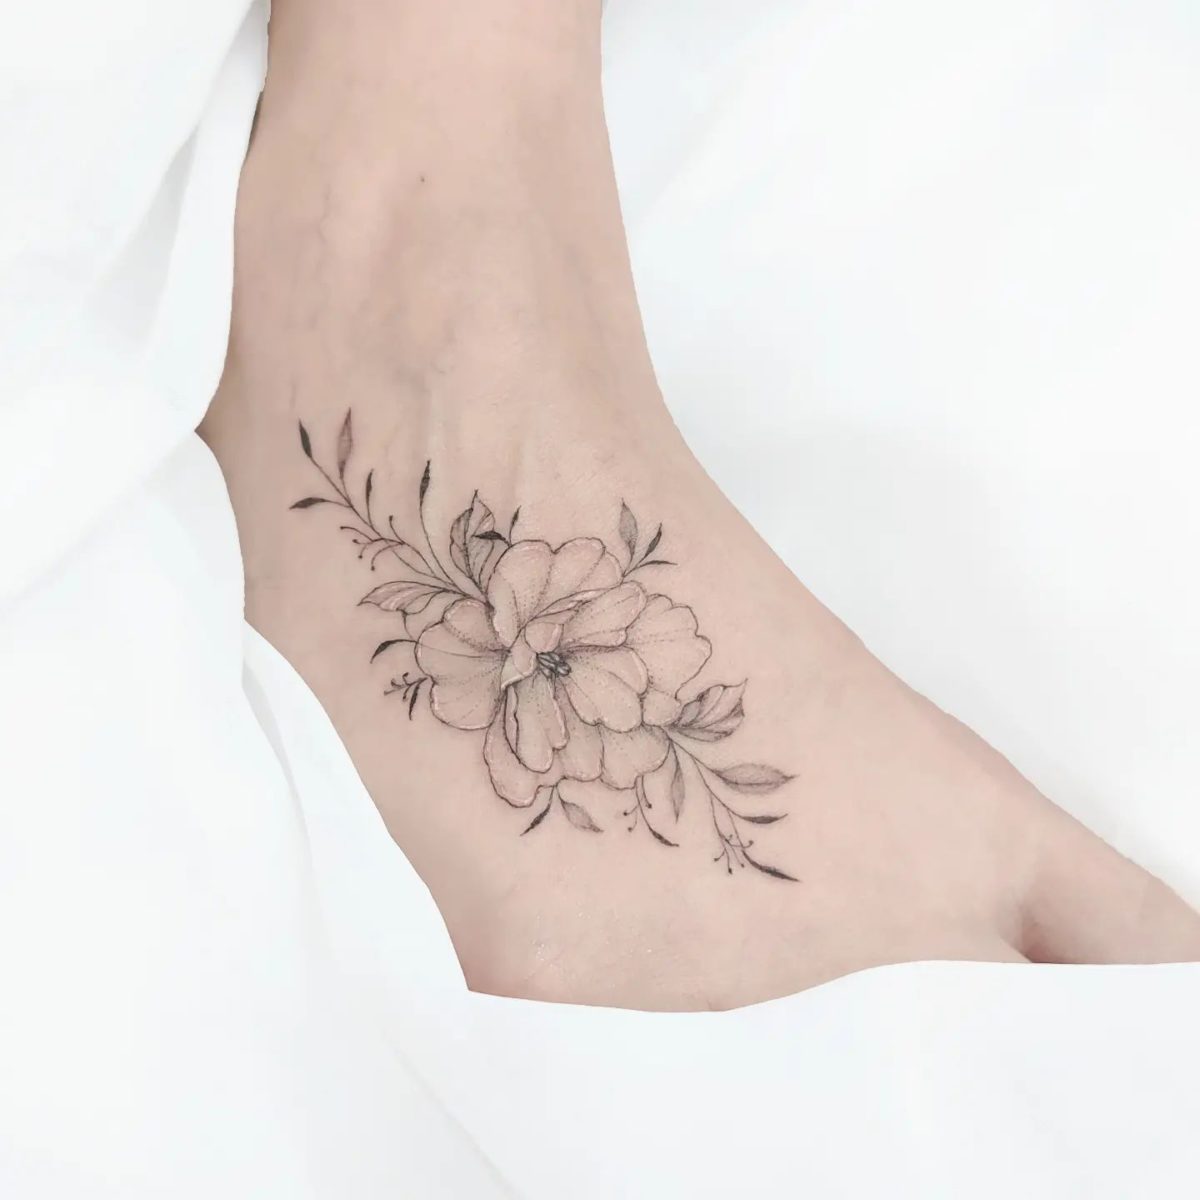 30 Foot Tattoos - From Big To Small Foot Tattoos